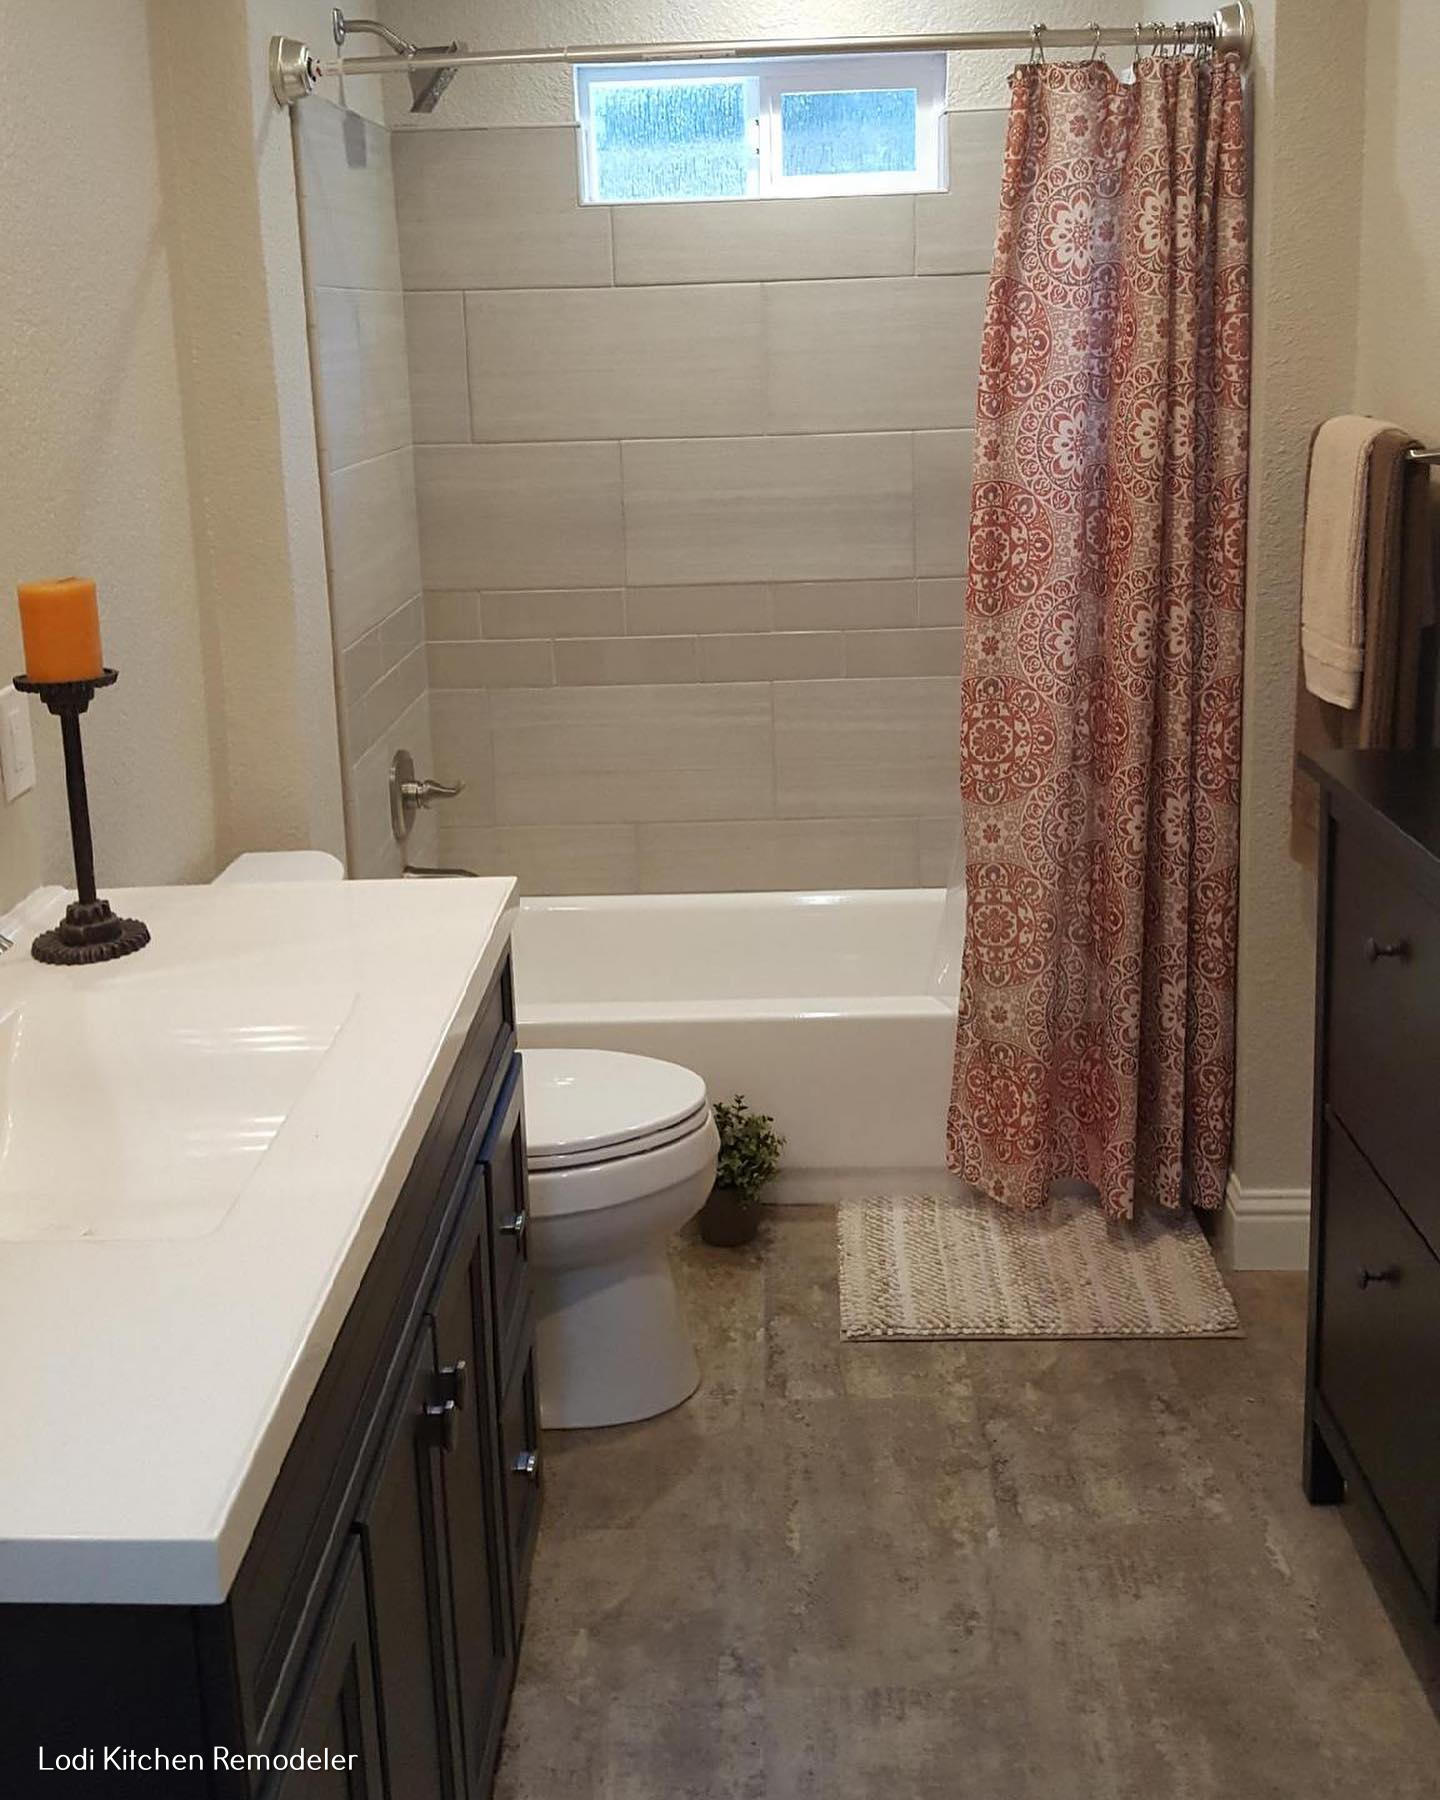 Schatz Construction & Restoration Highlights the Benefits of Remodeling a Bathroom